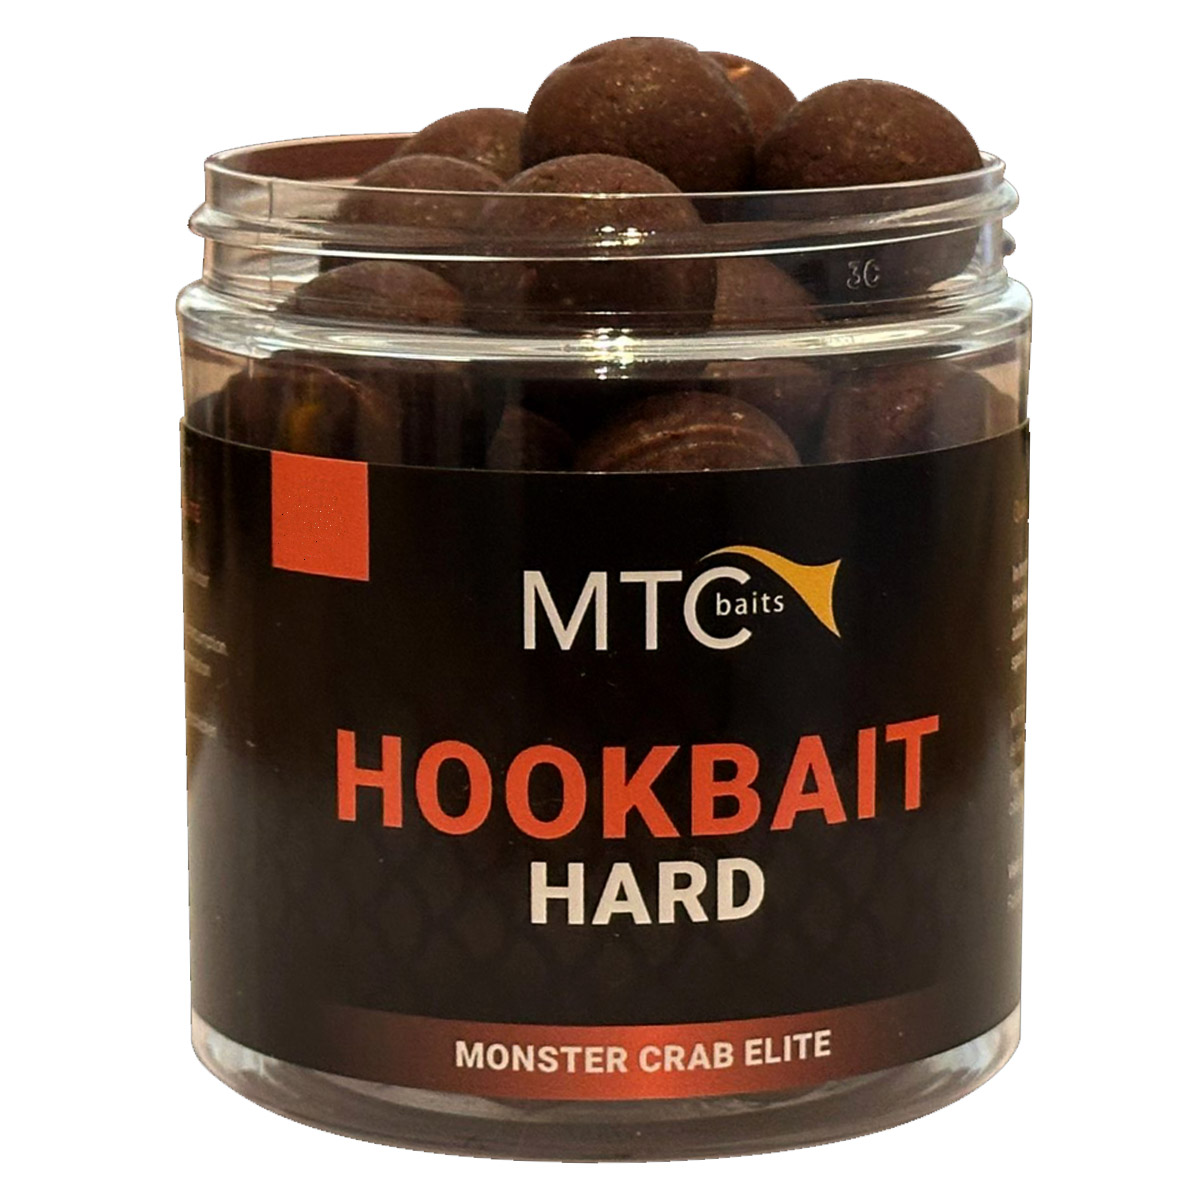 MTC Baits Hookbait Hard Monster Crab Elite 24 MM